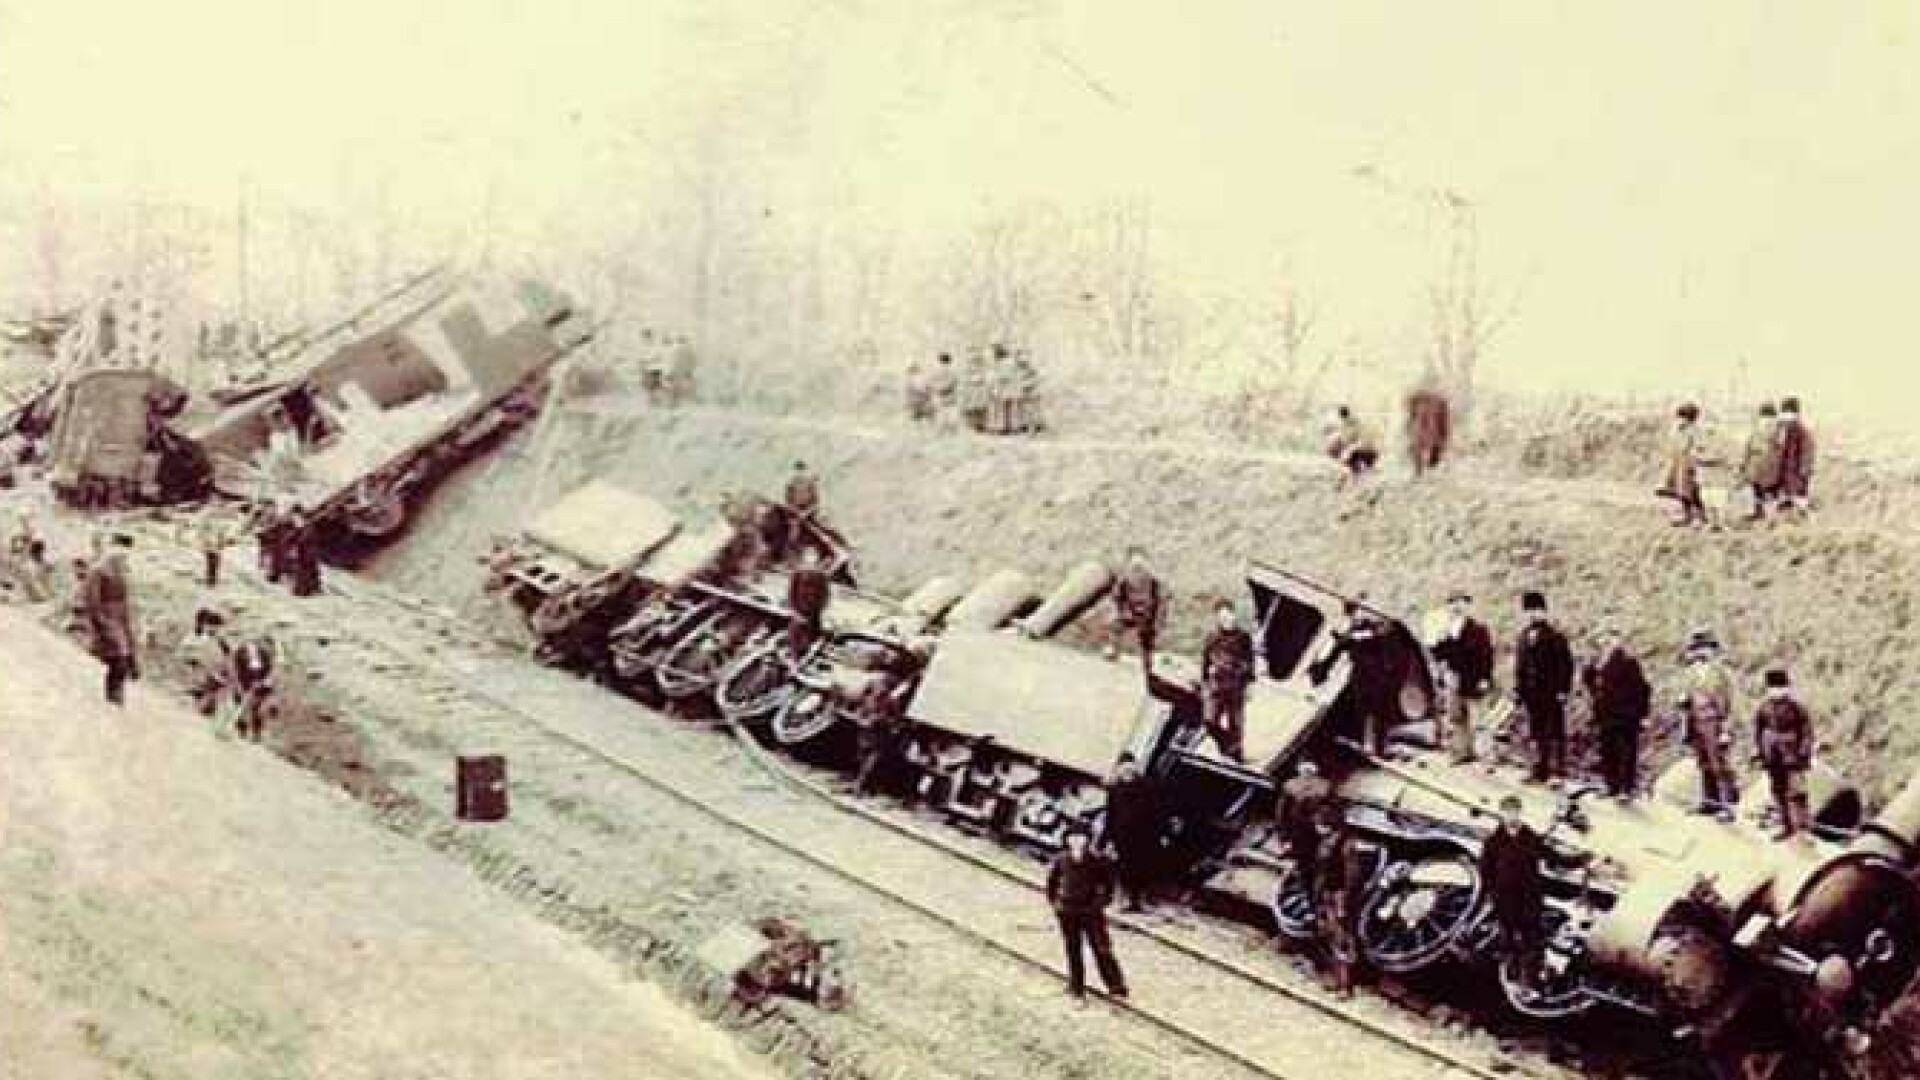 tragedie feroviara vintileanca